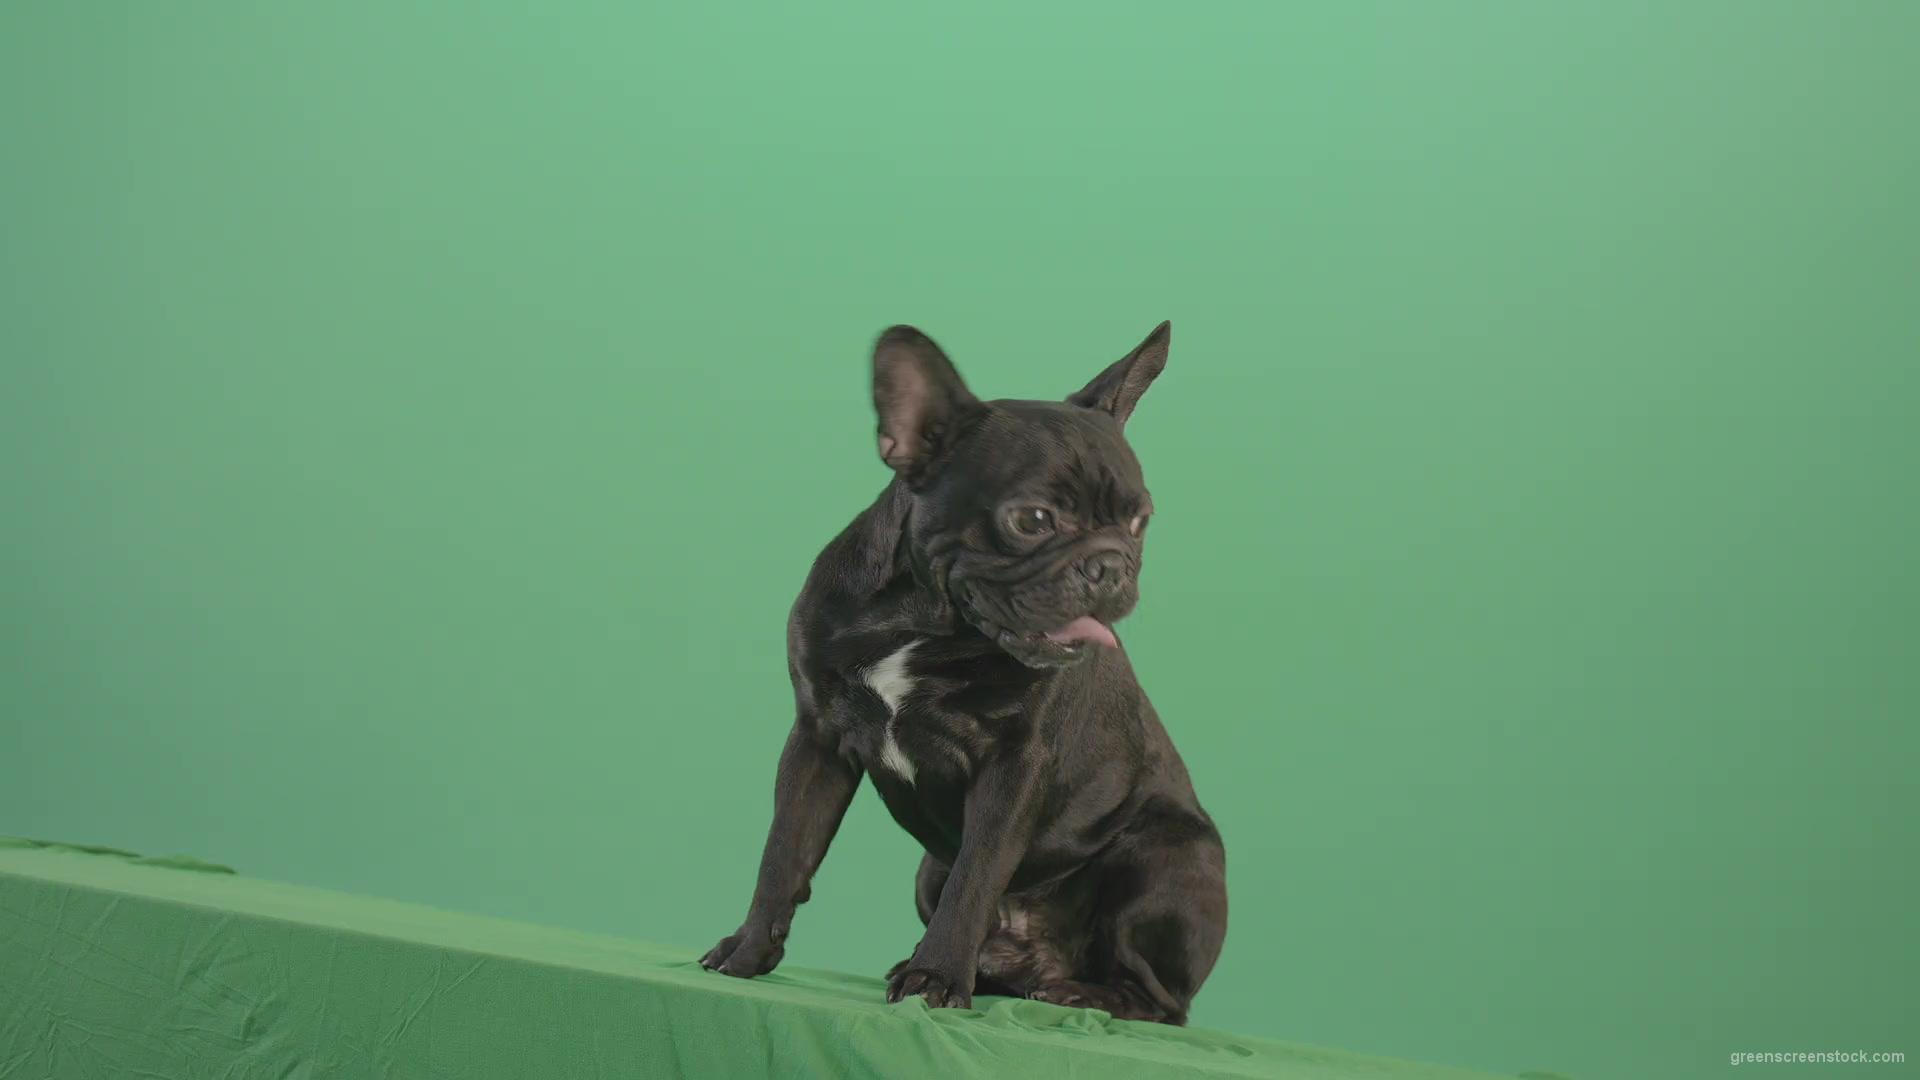 Lazy-french-bulldog-animal-dog-posing-on-green-screen-4K-Video-Footage-1920_001 Green Screen Stock